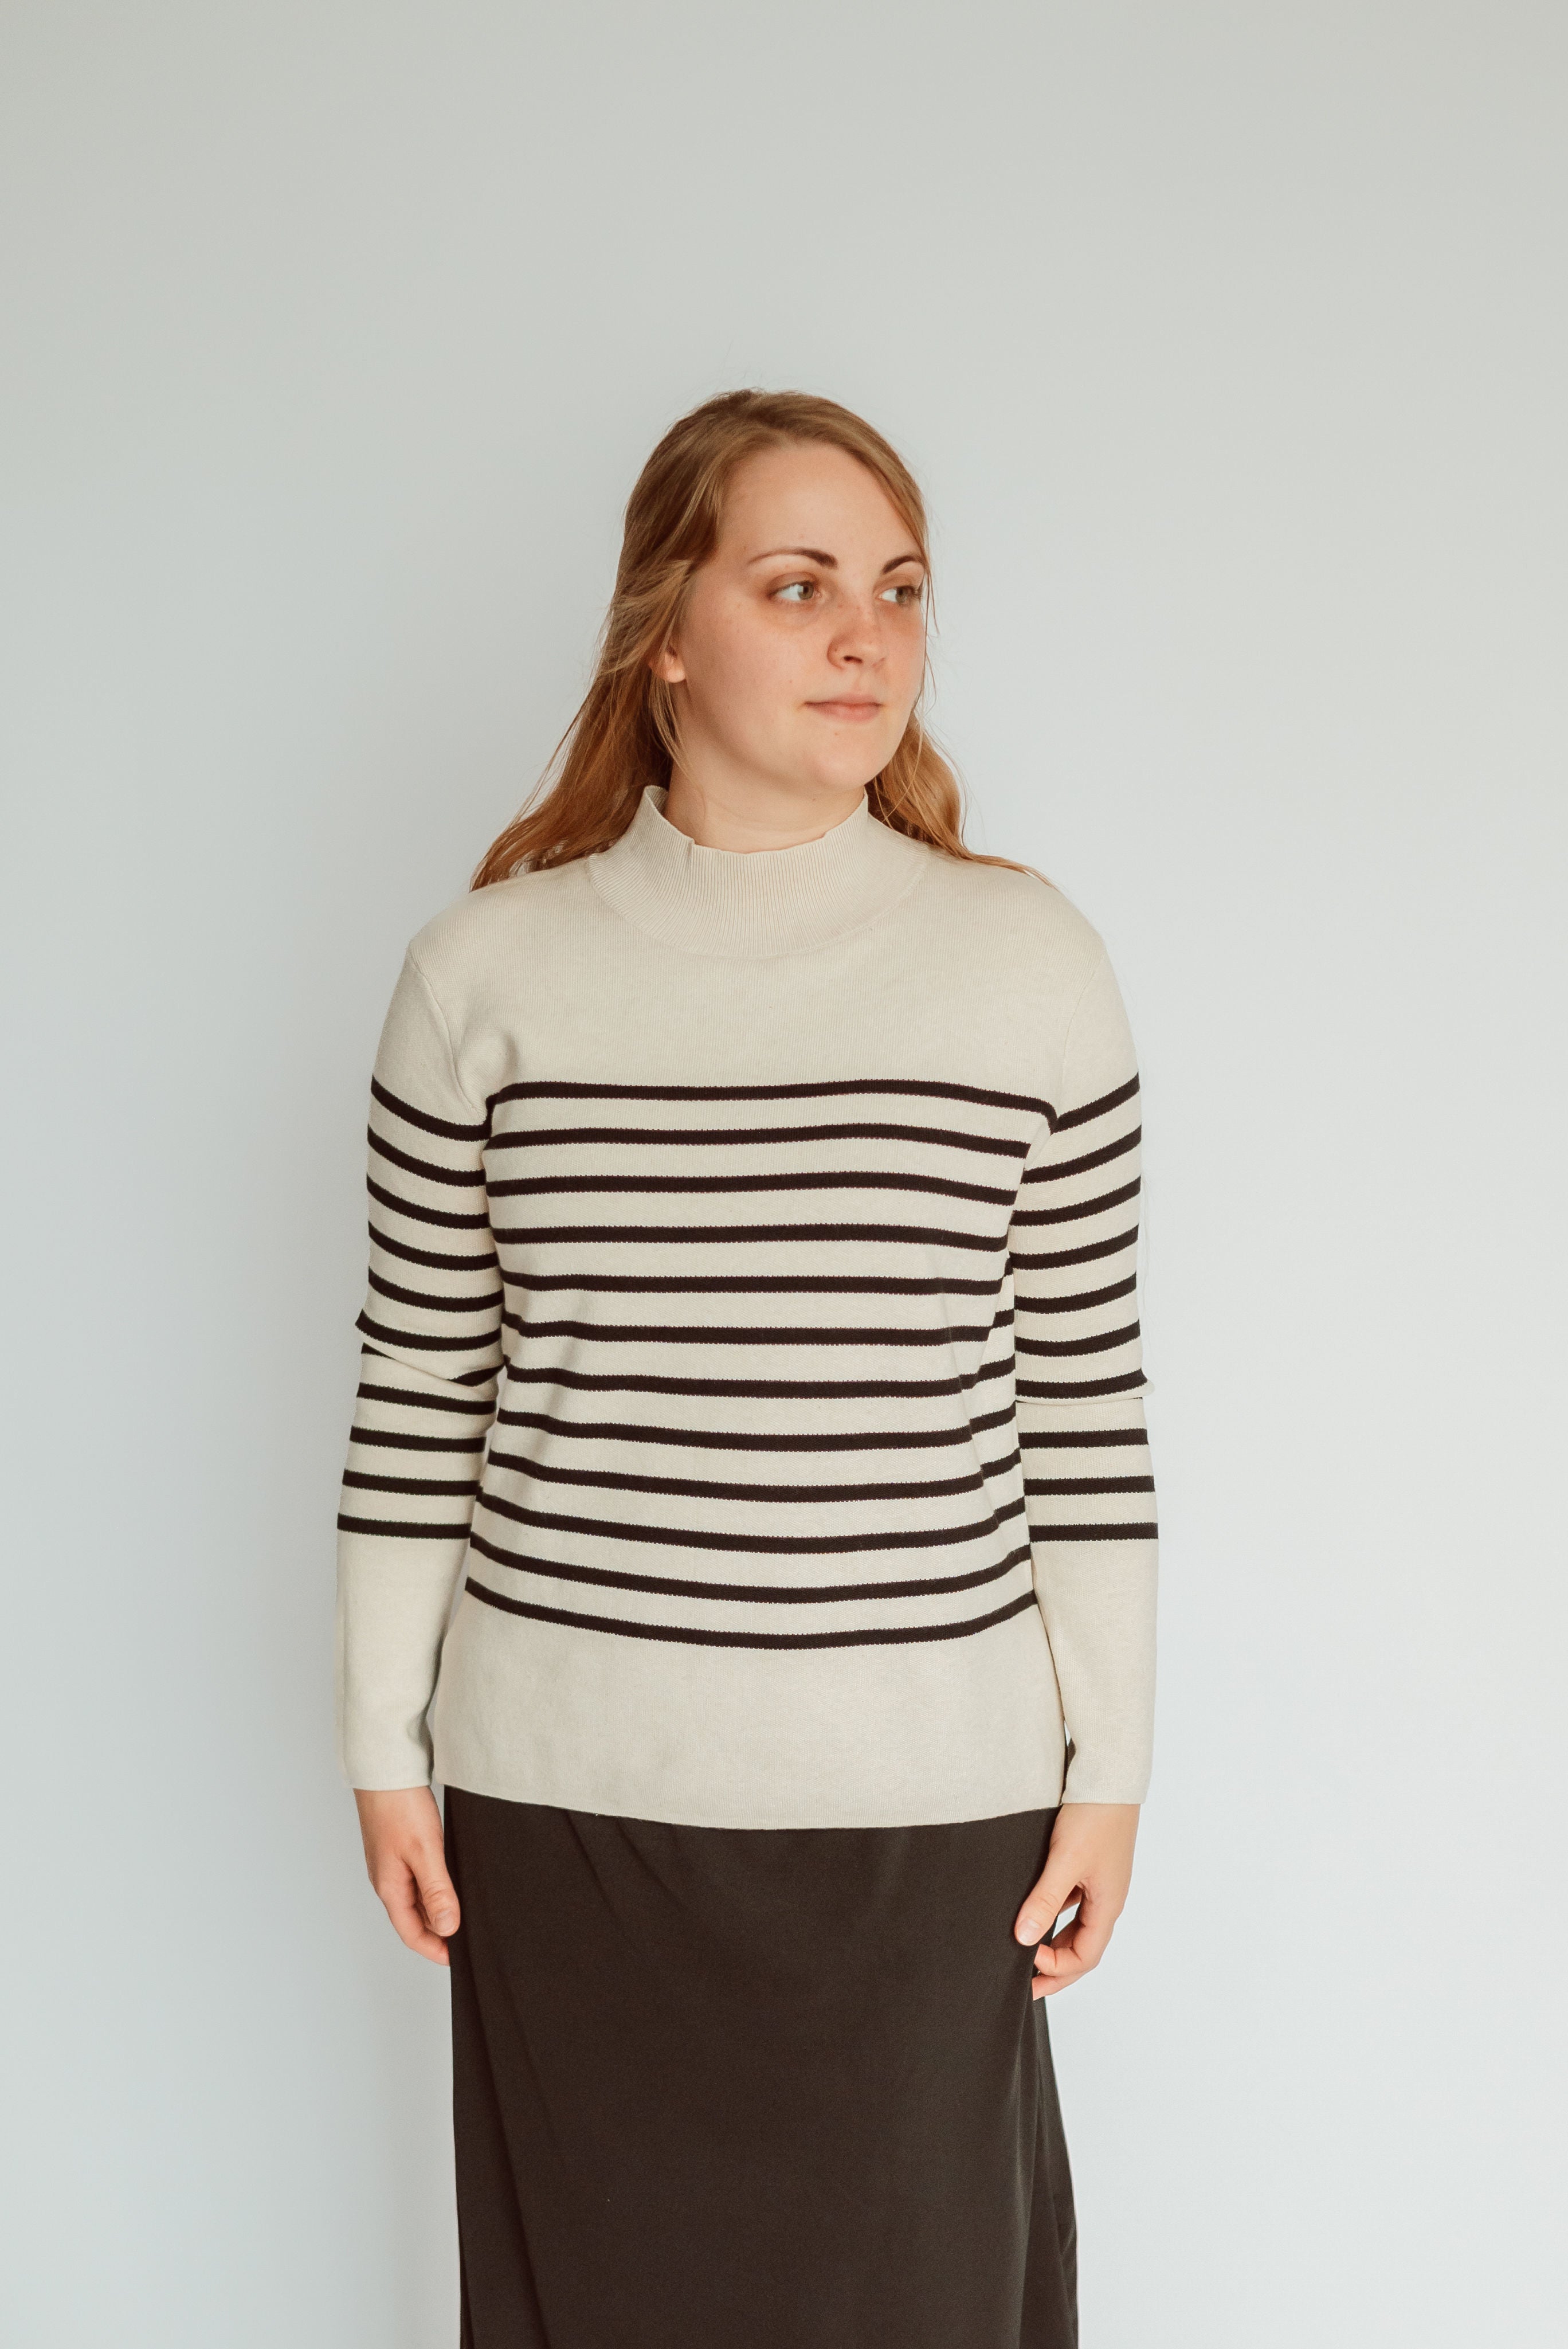 Jasmine Sweater in Oat/Black Stripes